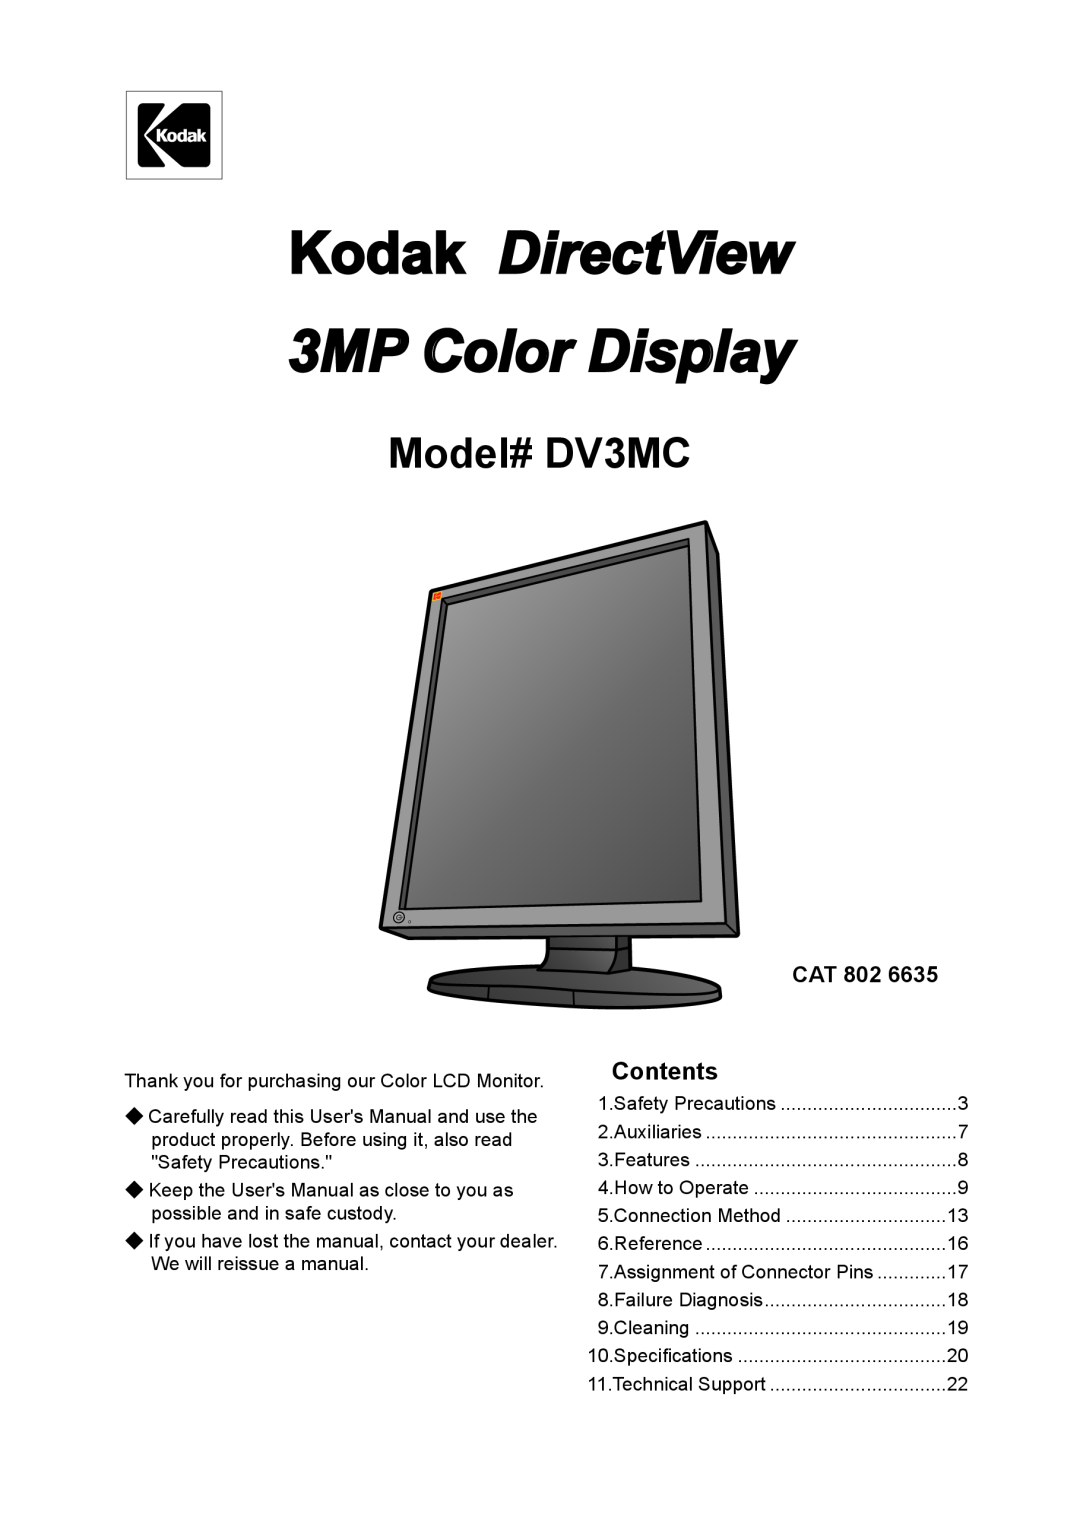 Kodak user manual Contents, Cat, Kodak DirectView 3MP Color Display, Model# DV3MC 